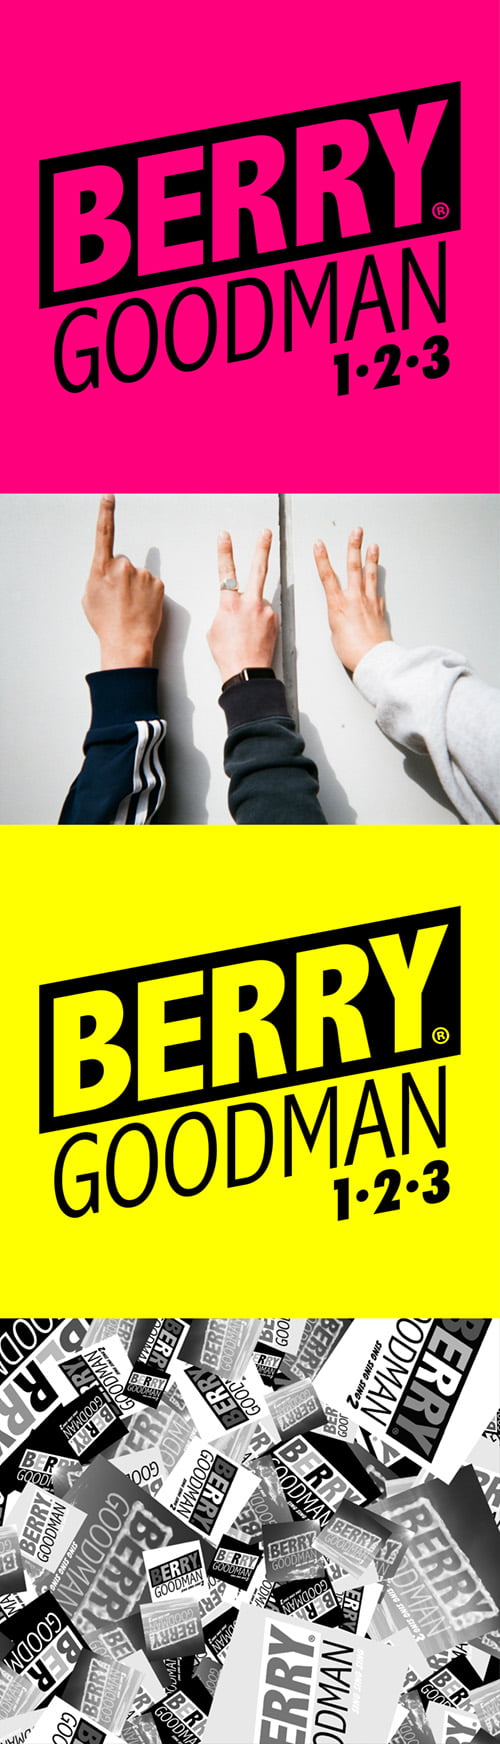 BERRY GOODMAN / 1・2・3